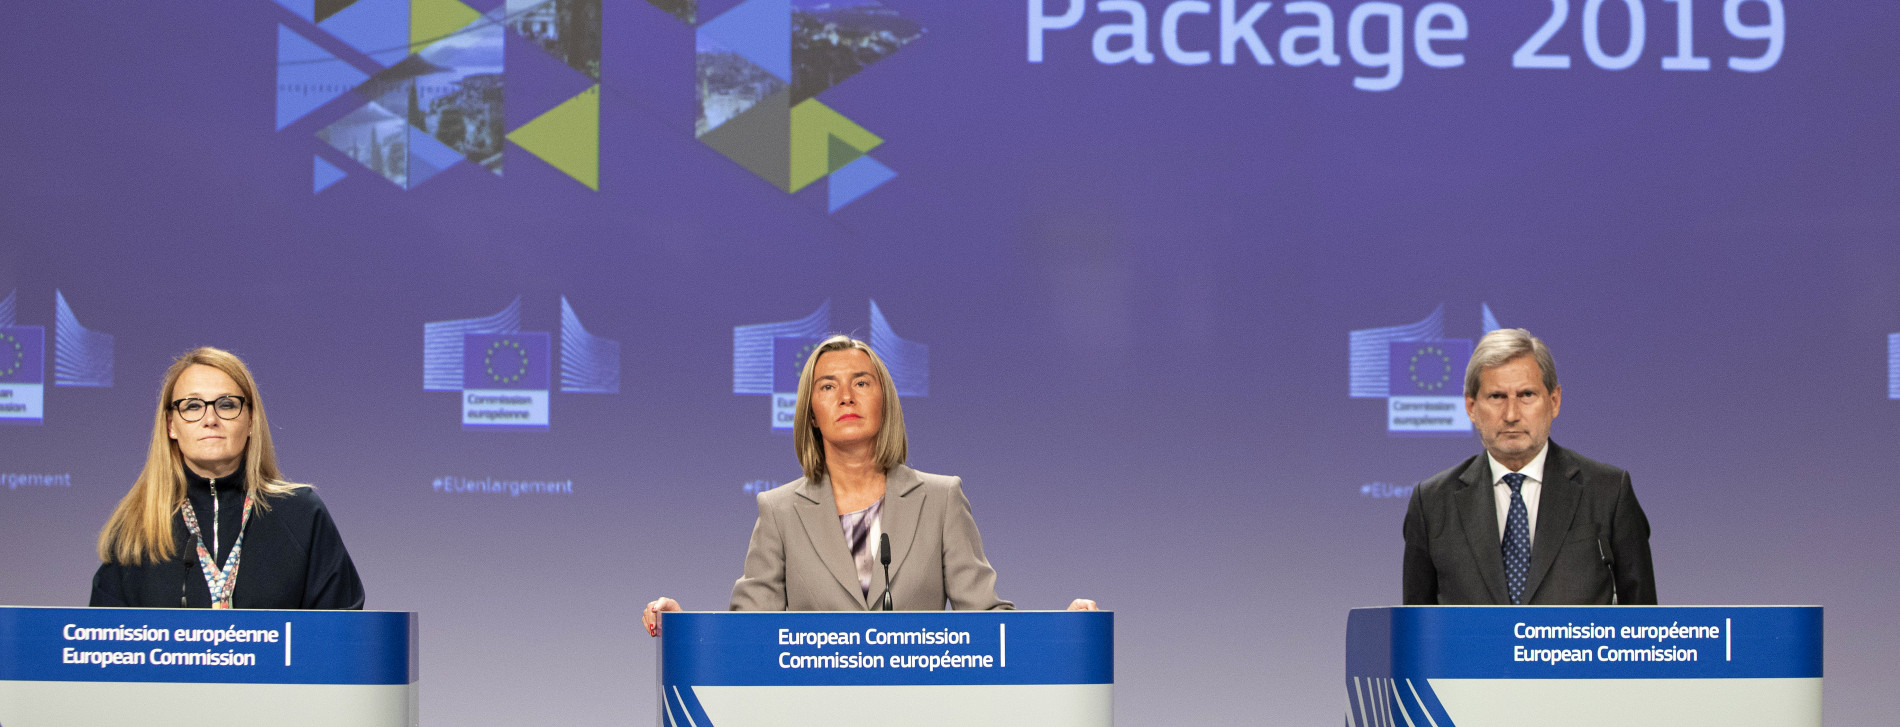 Mogherini: Zapadni Balkan je Europa, započnimo pregovore sa Sjevernom Makedonijom i Albanijom  